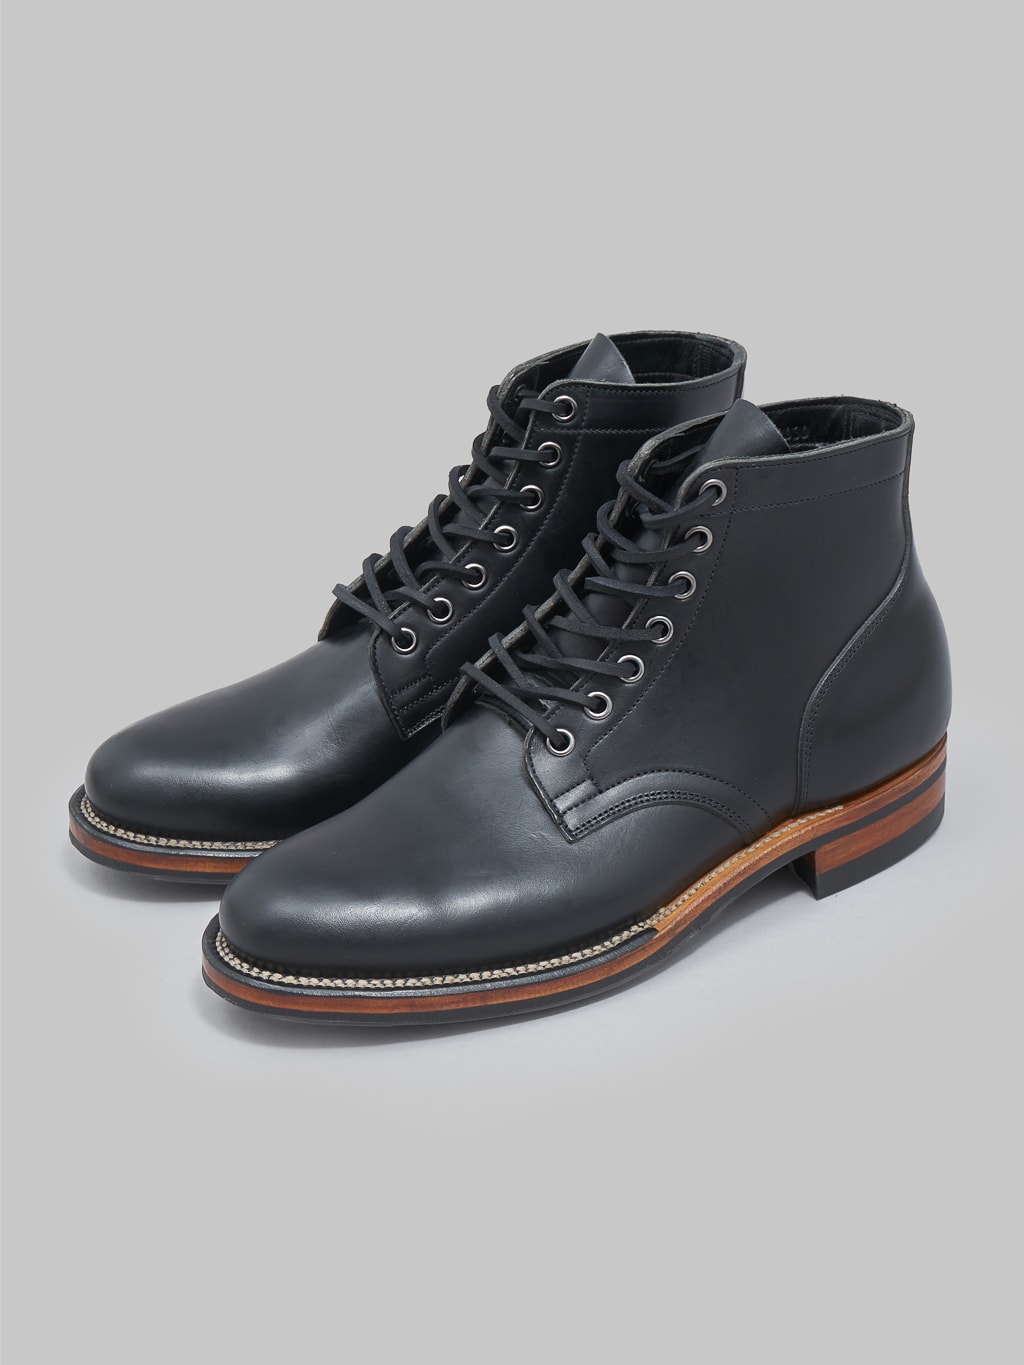 Viberg Service Boot 2030 Black Chromexcel leather